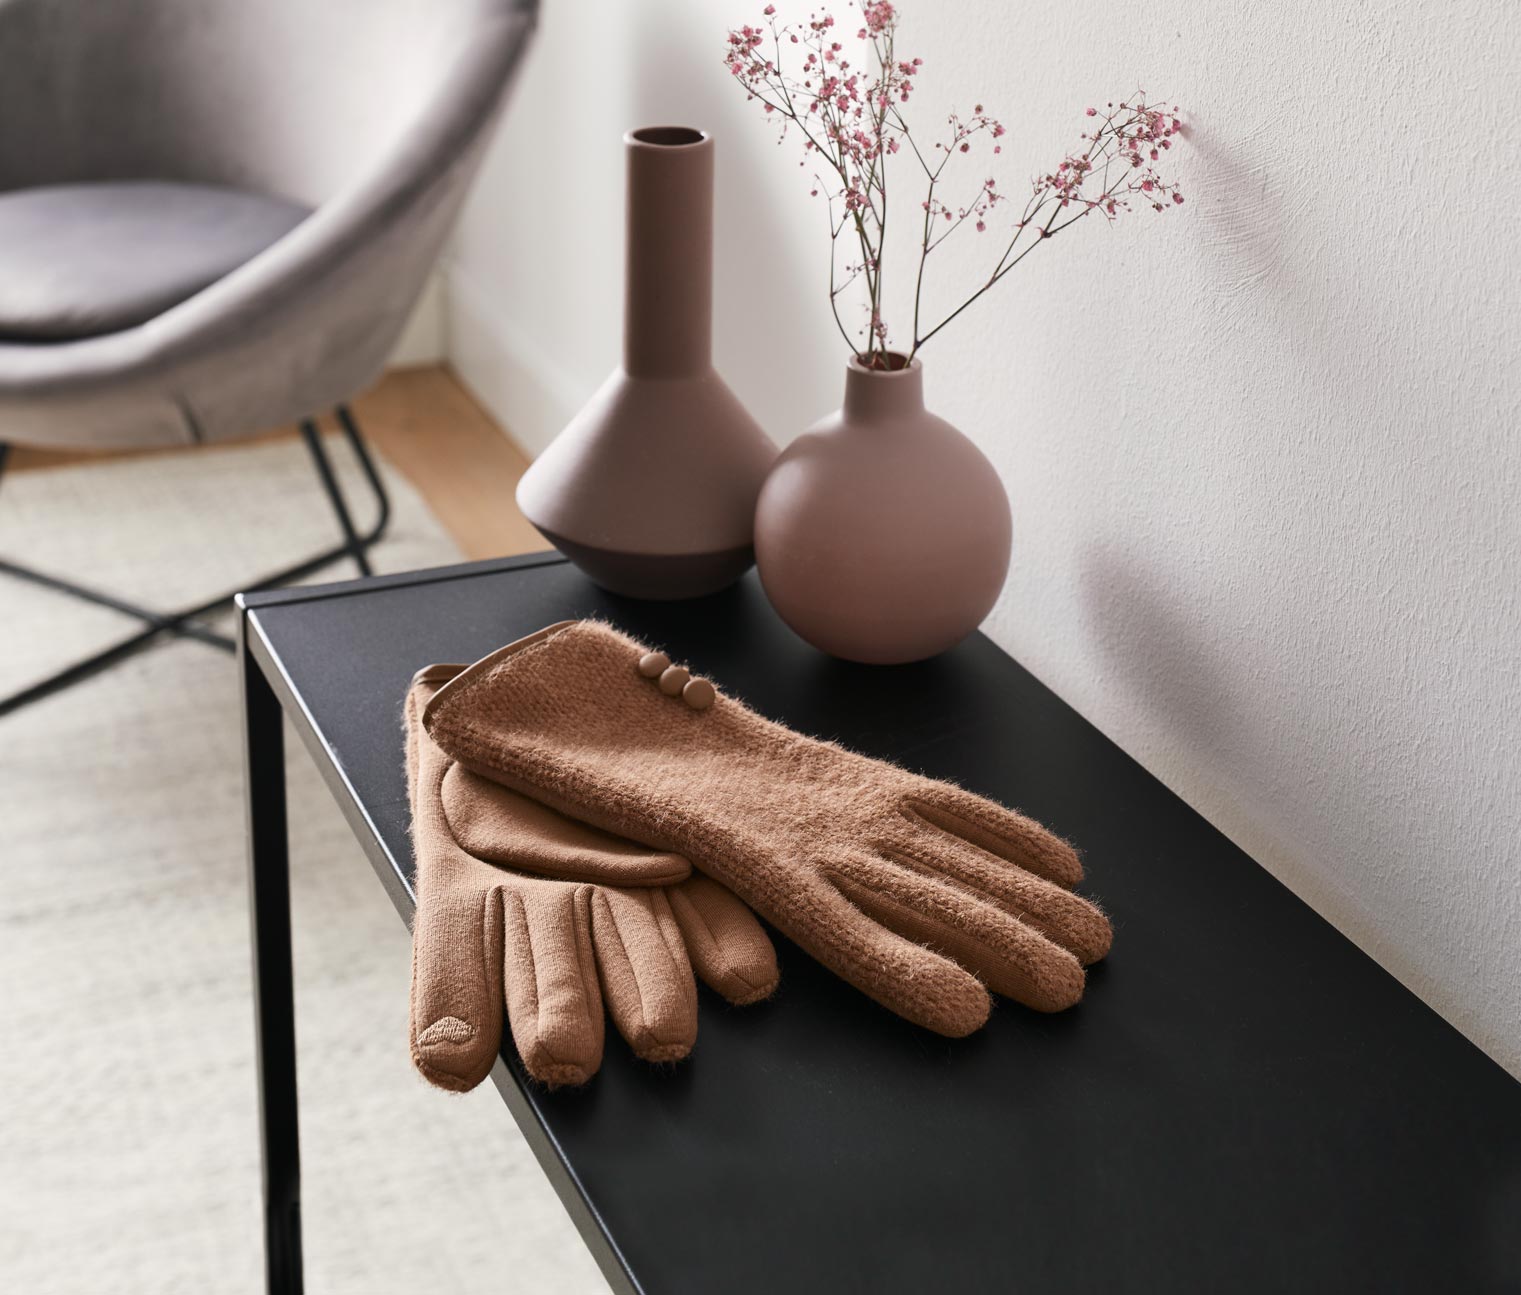 Handschuhe im Materialmix, cognacfarben online bestellen bei Tchibo 621790